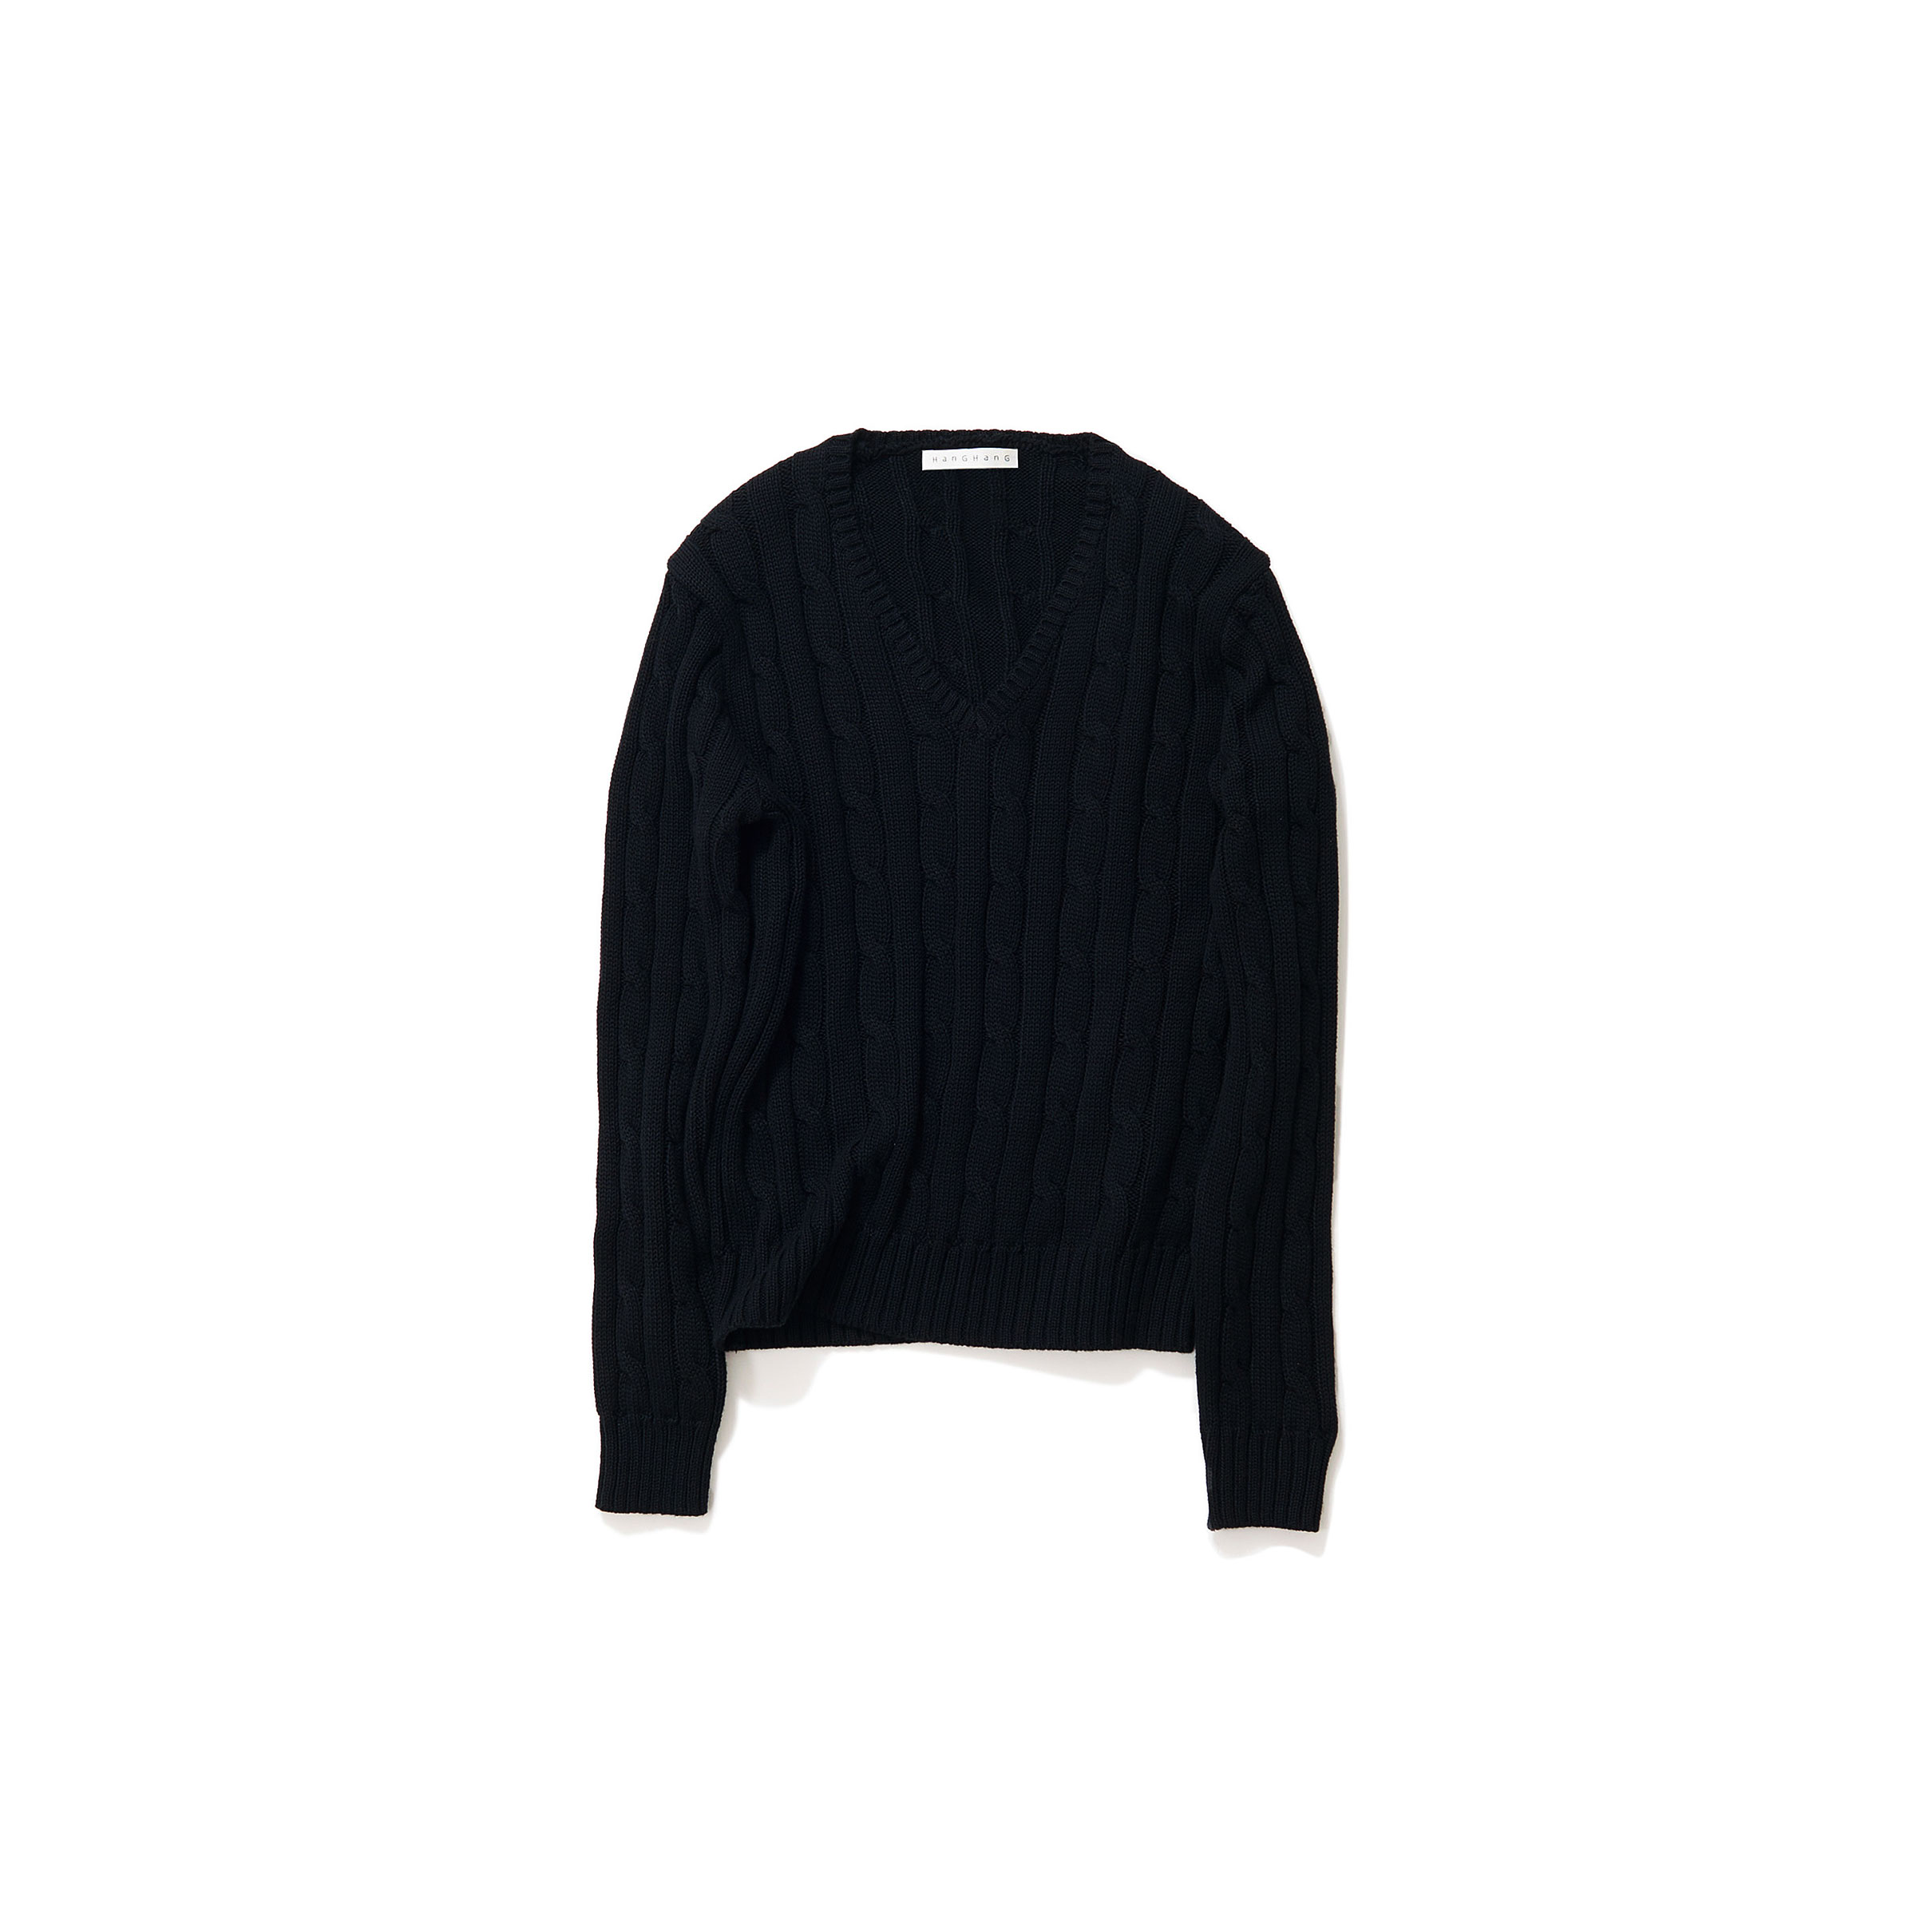 black v-neck cable knit